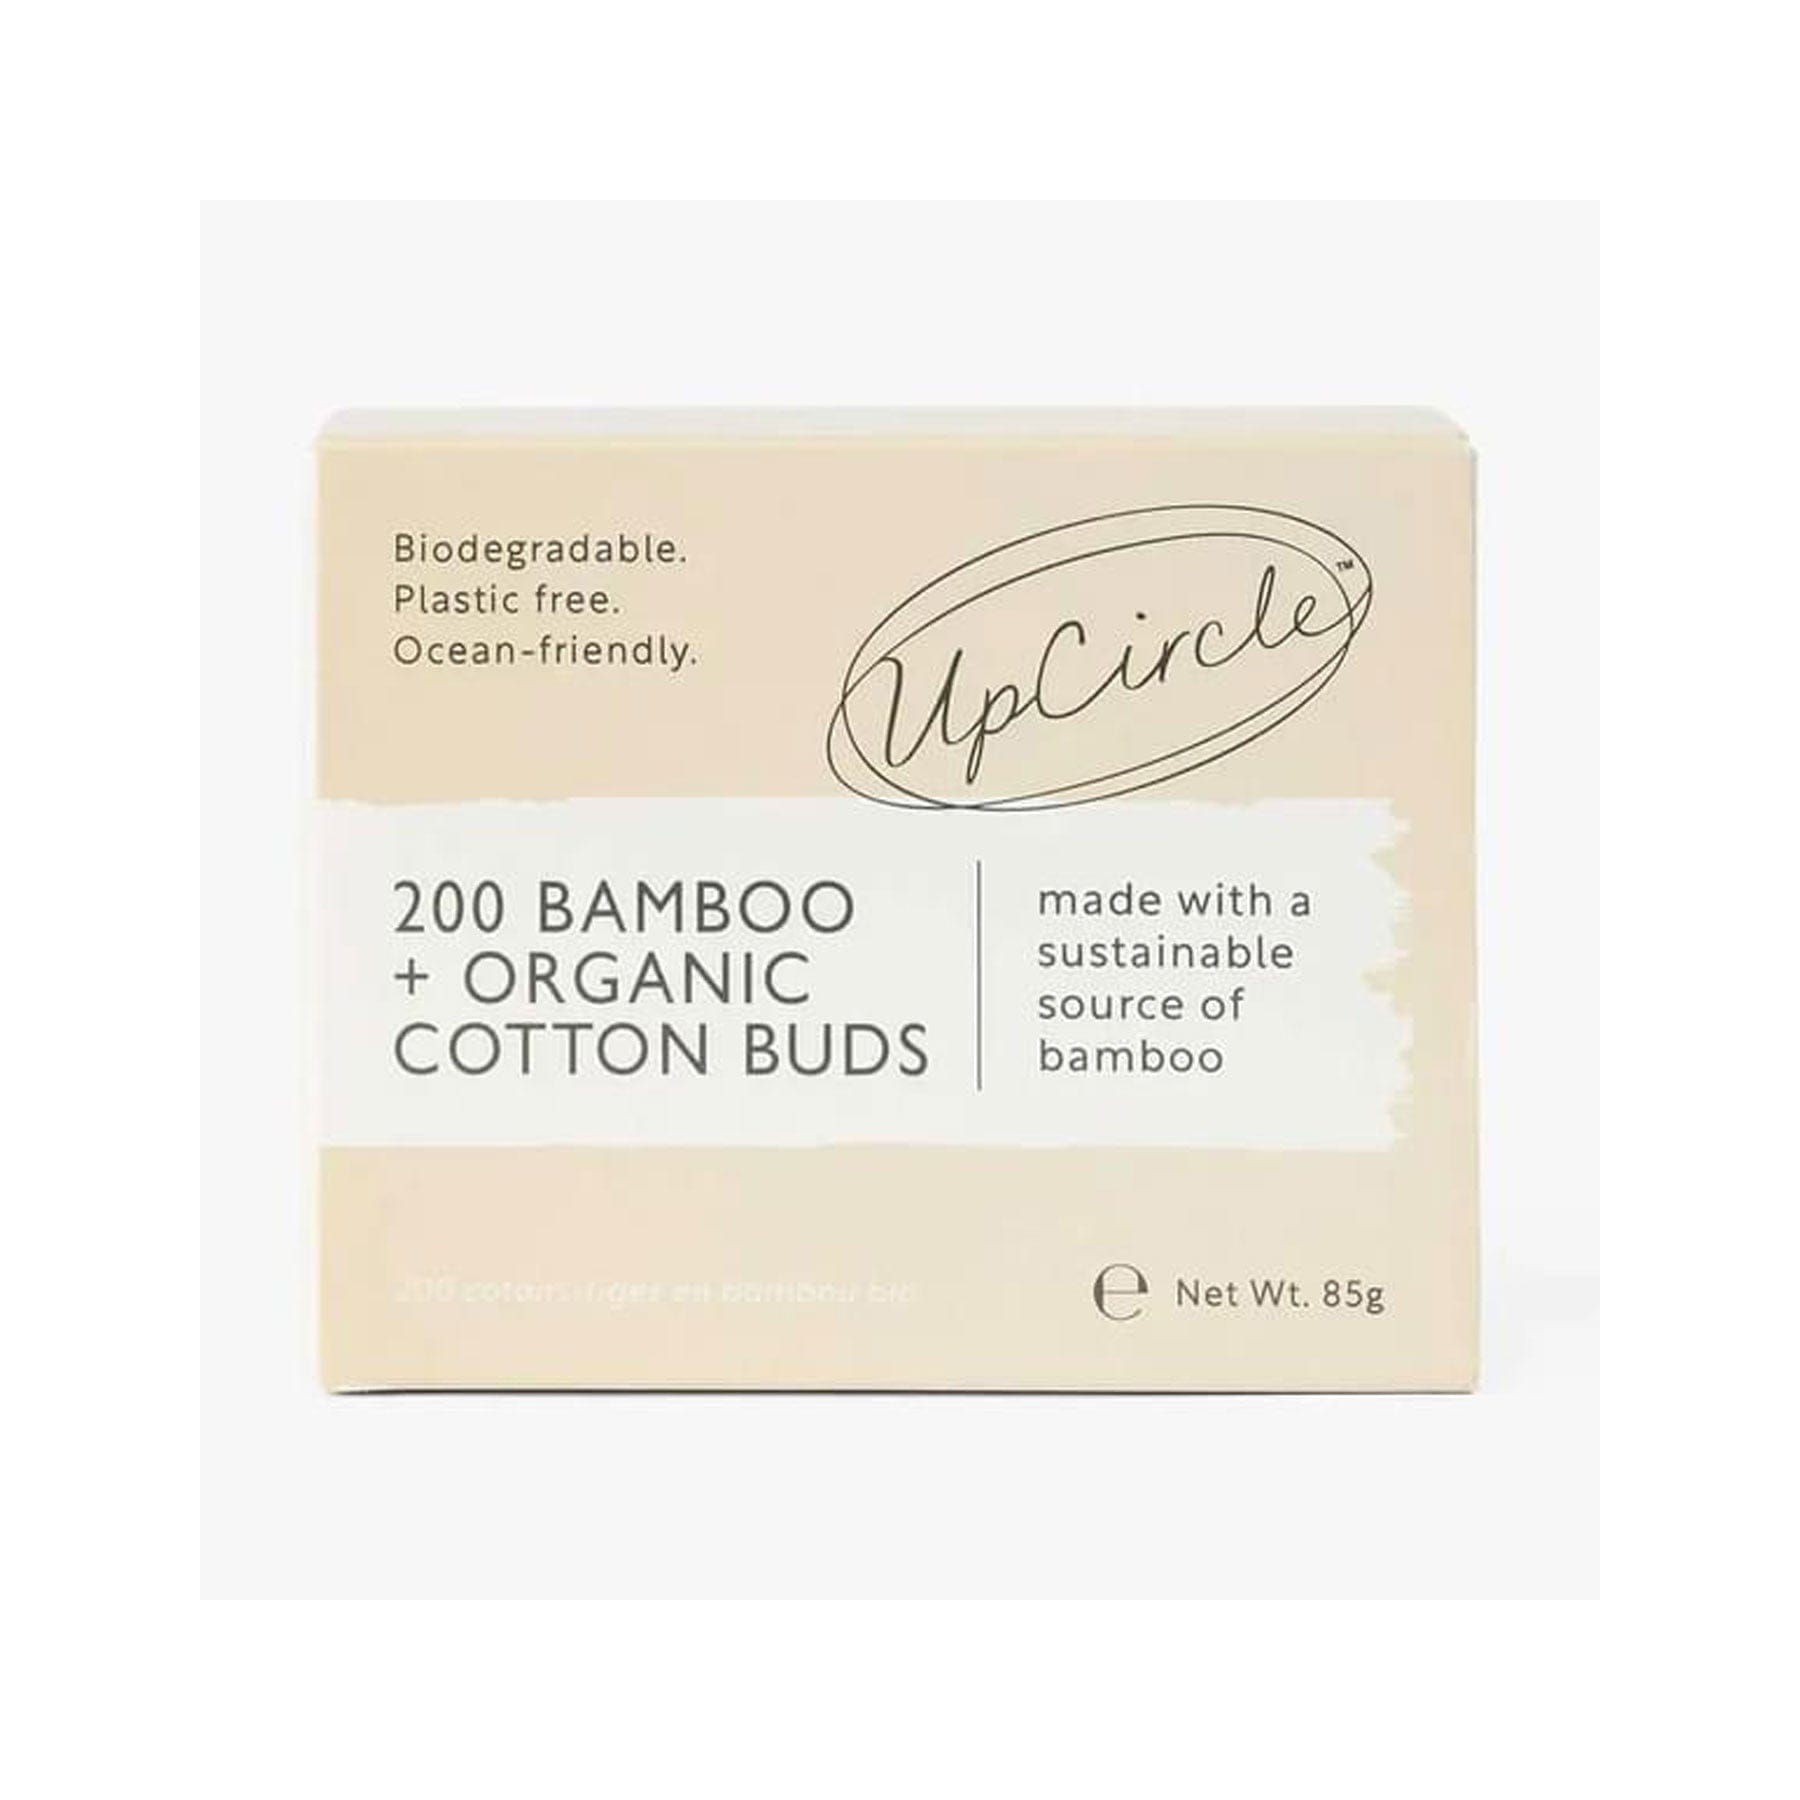 Bamboo organic cotton buds